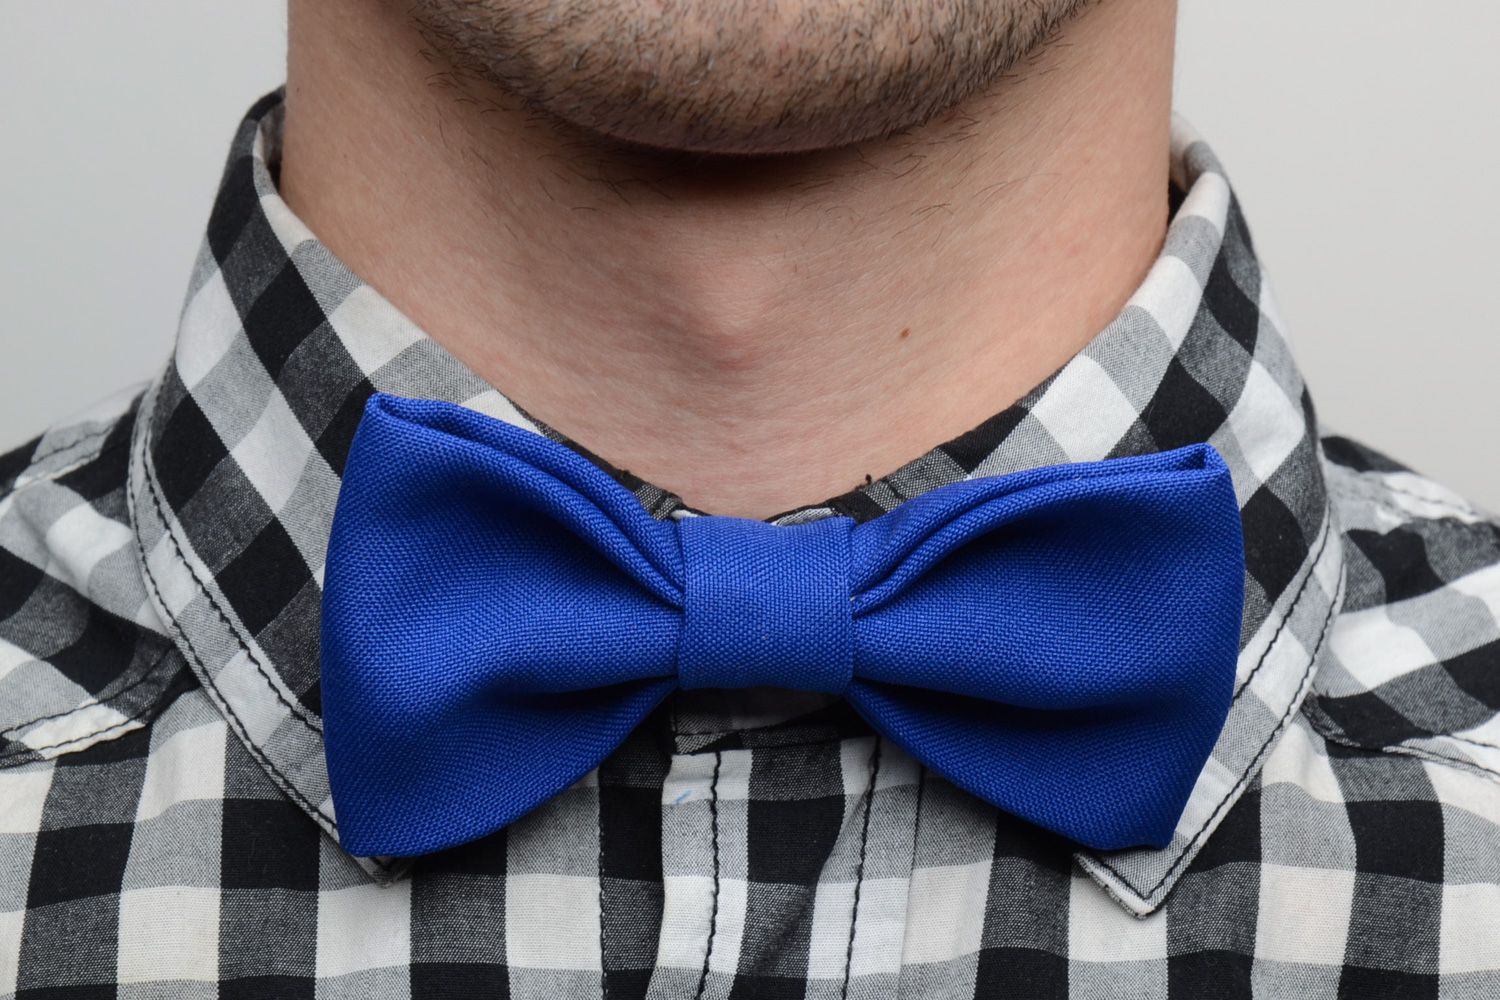 Festive handmade bow tie sewn of bright blue costume fabric for stylish men photo 1